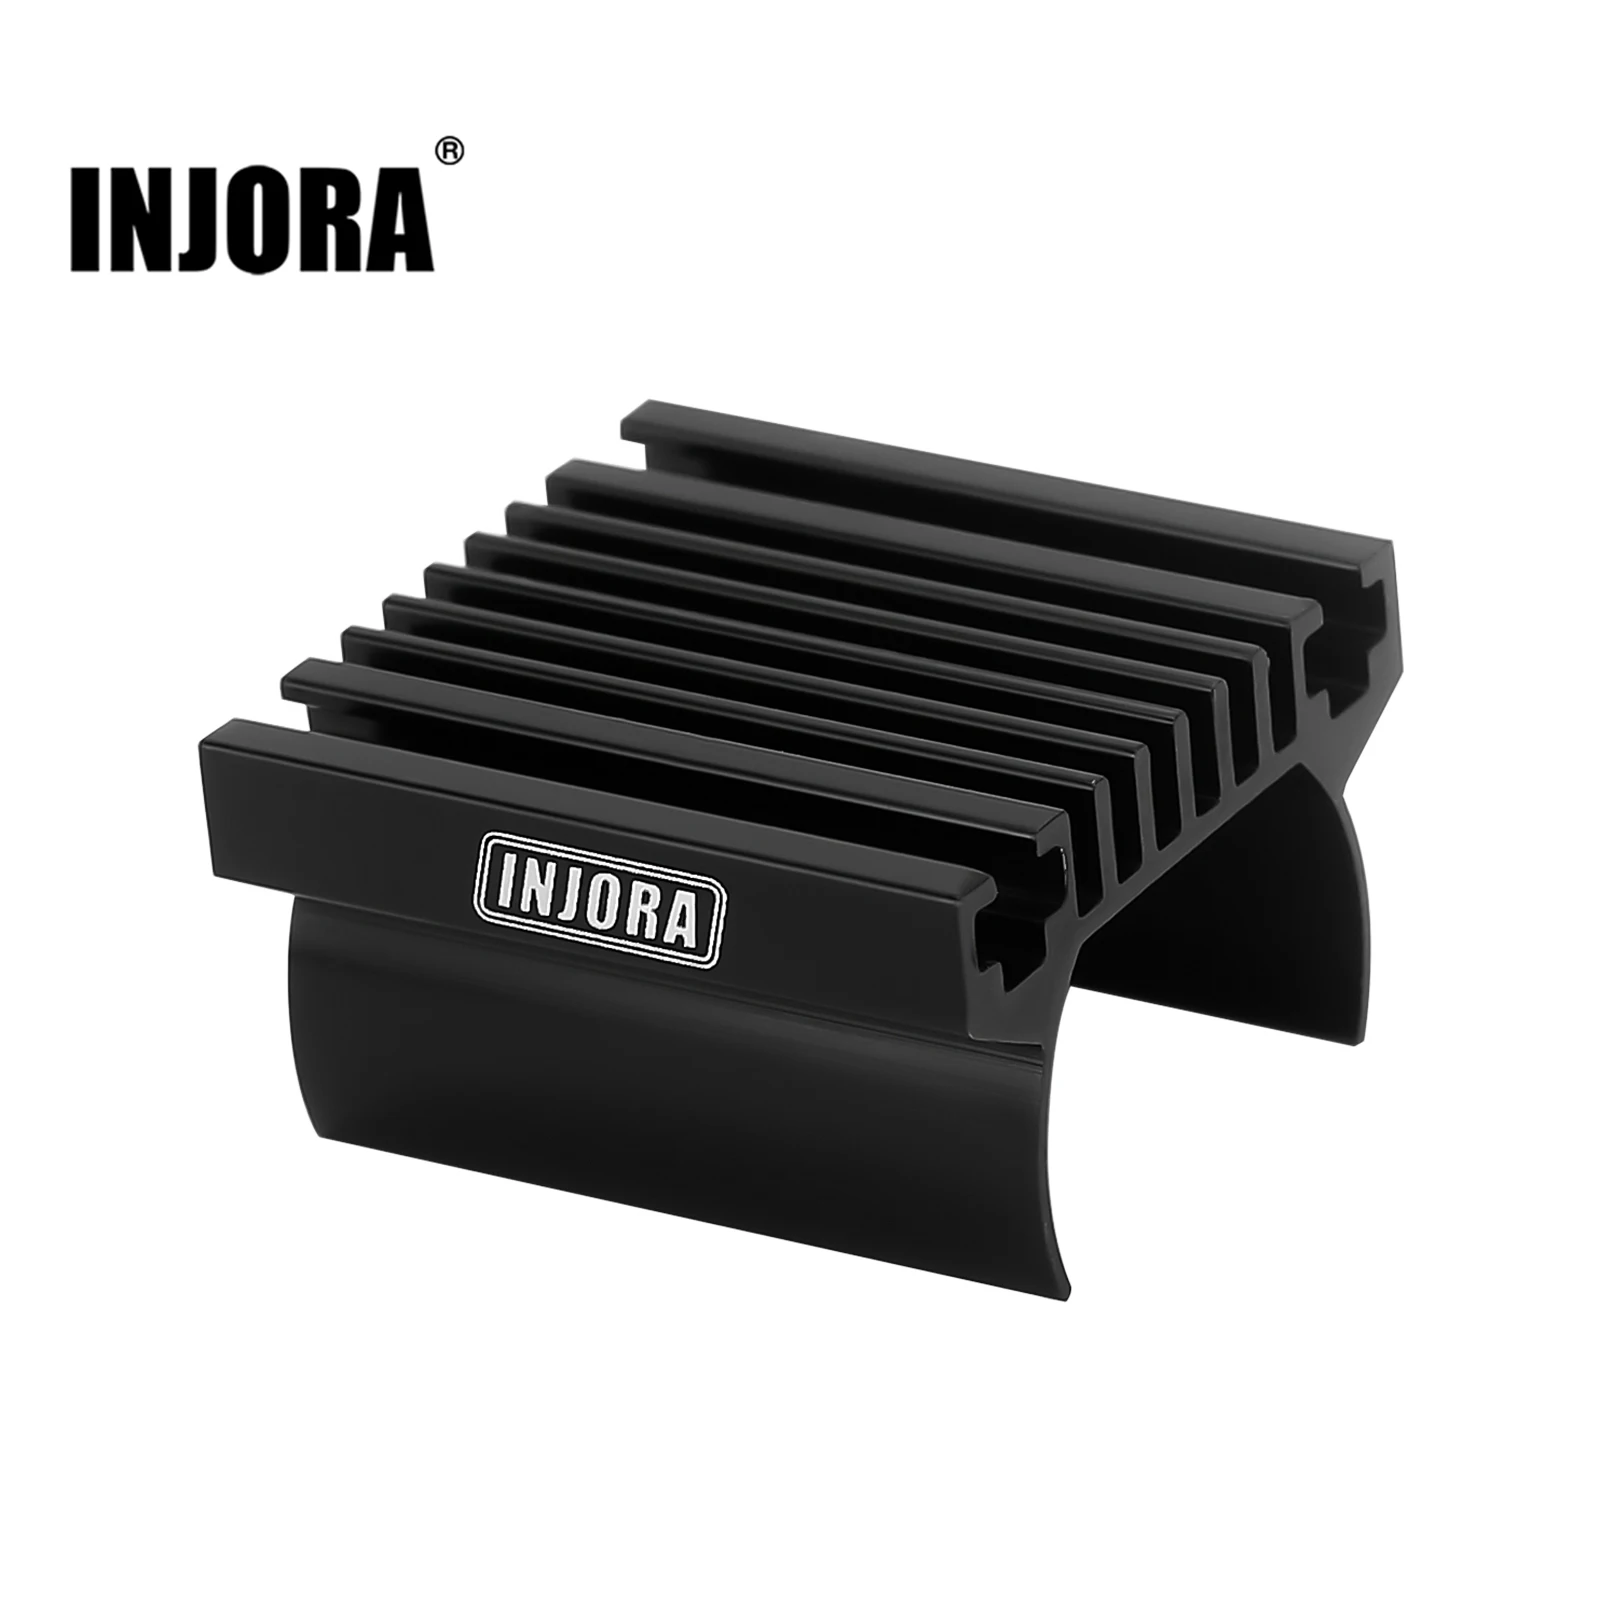 INJORA-Aluminum-180-Motor-Heat-Sink-for-1-18-RC-Crawler-TRX4M-Upgrade.webp